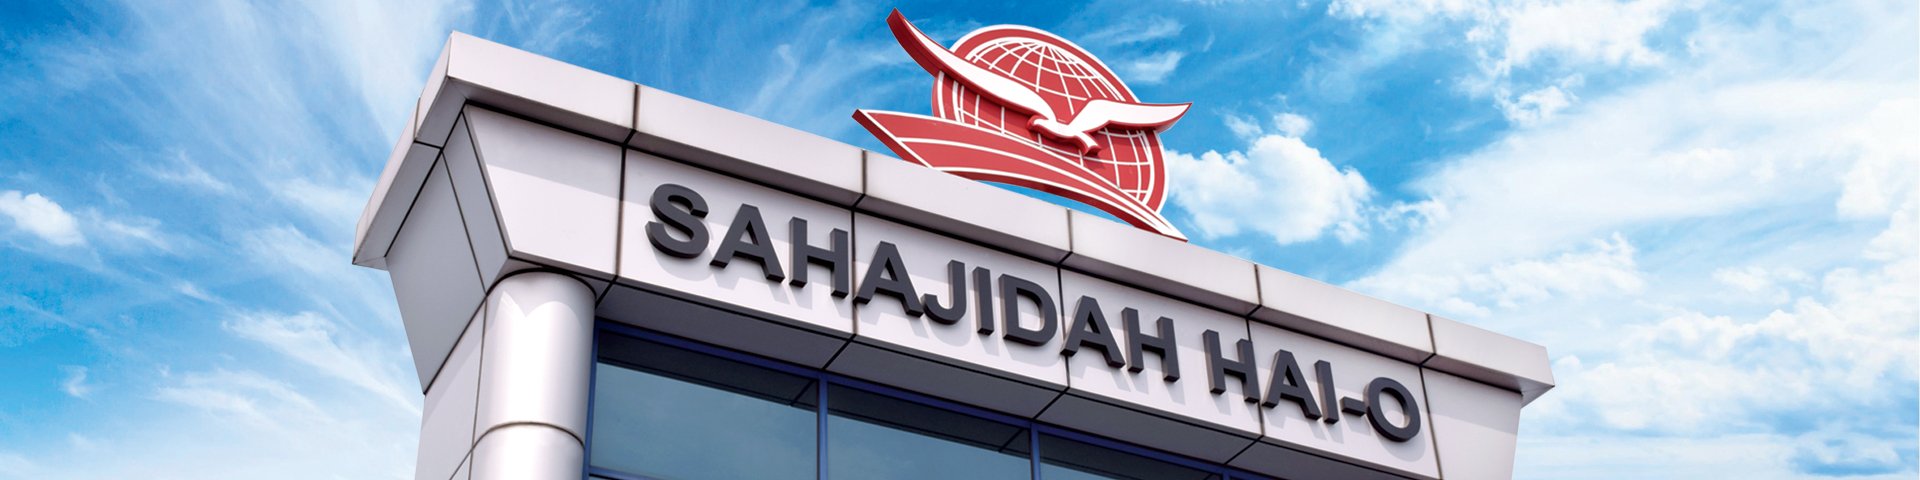 Company Profile | Sahajidah Hai-O